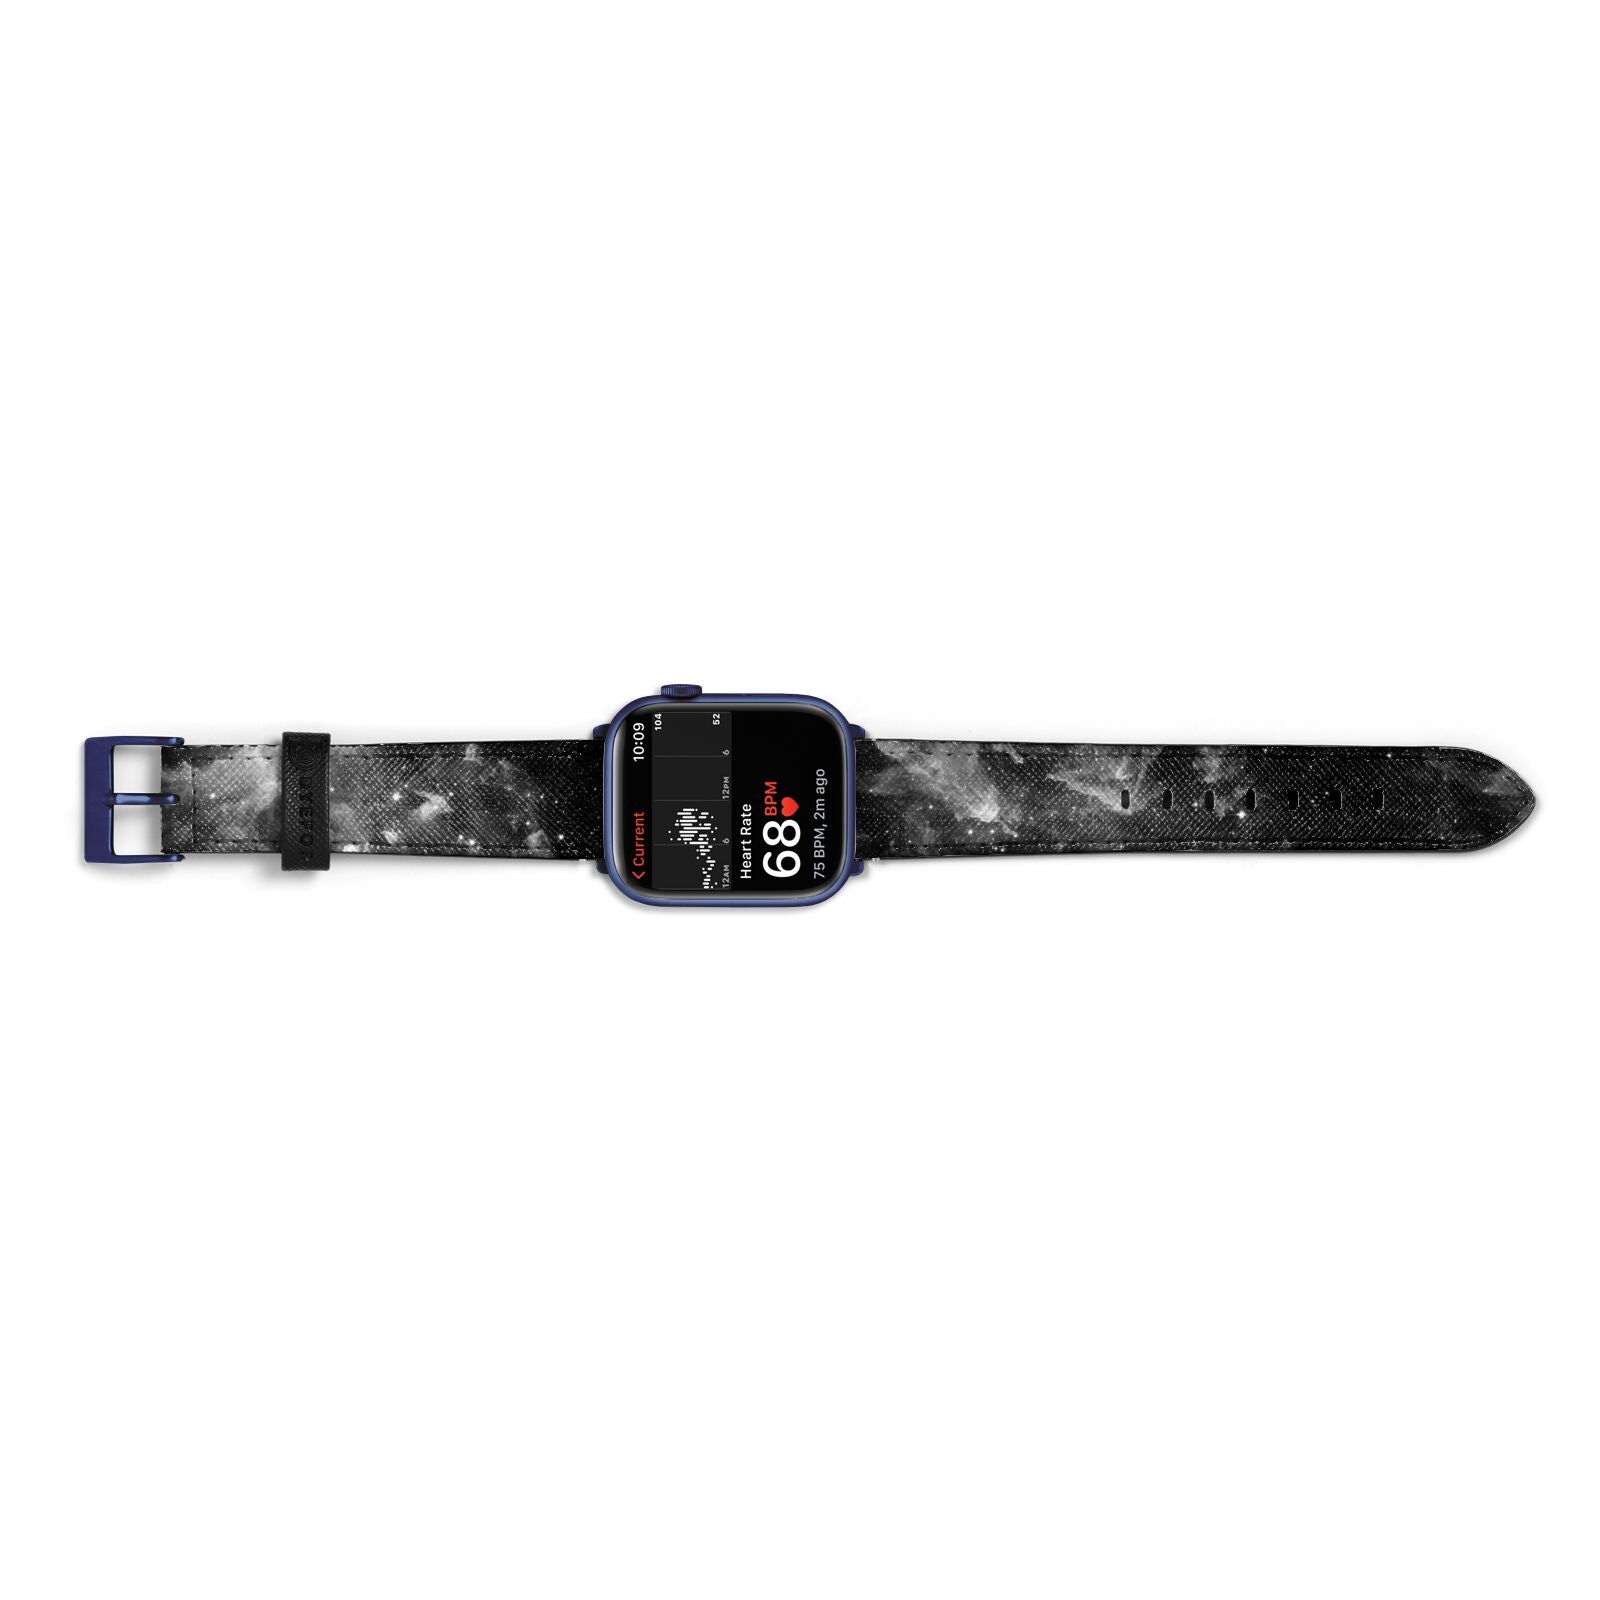 Black Space Apple Watch Strap Size 38mm Landscape Image Blue Hardware